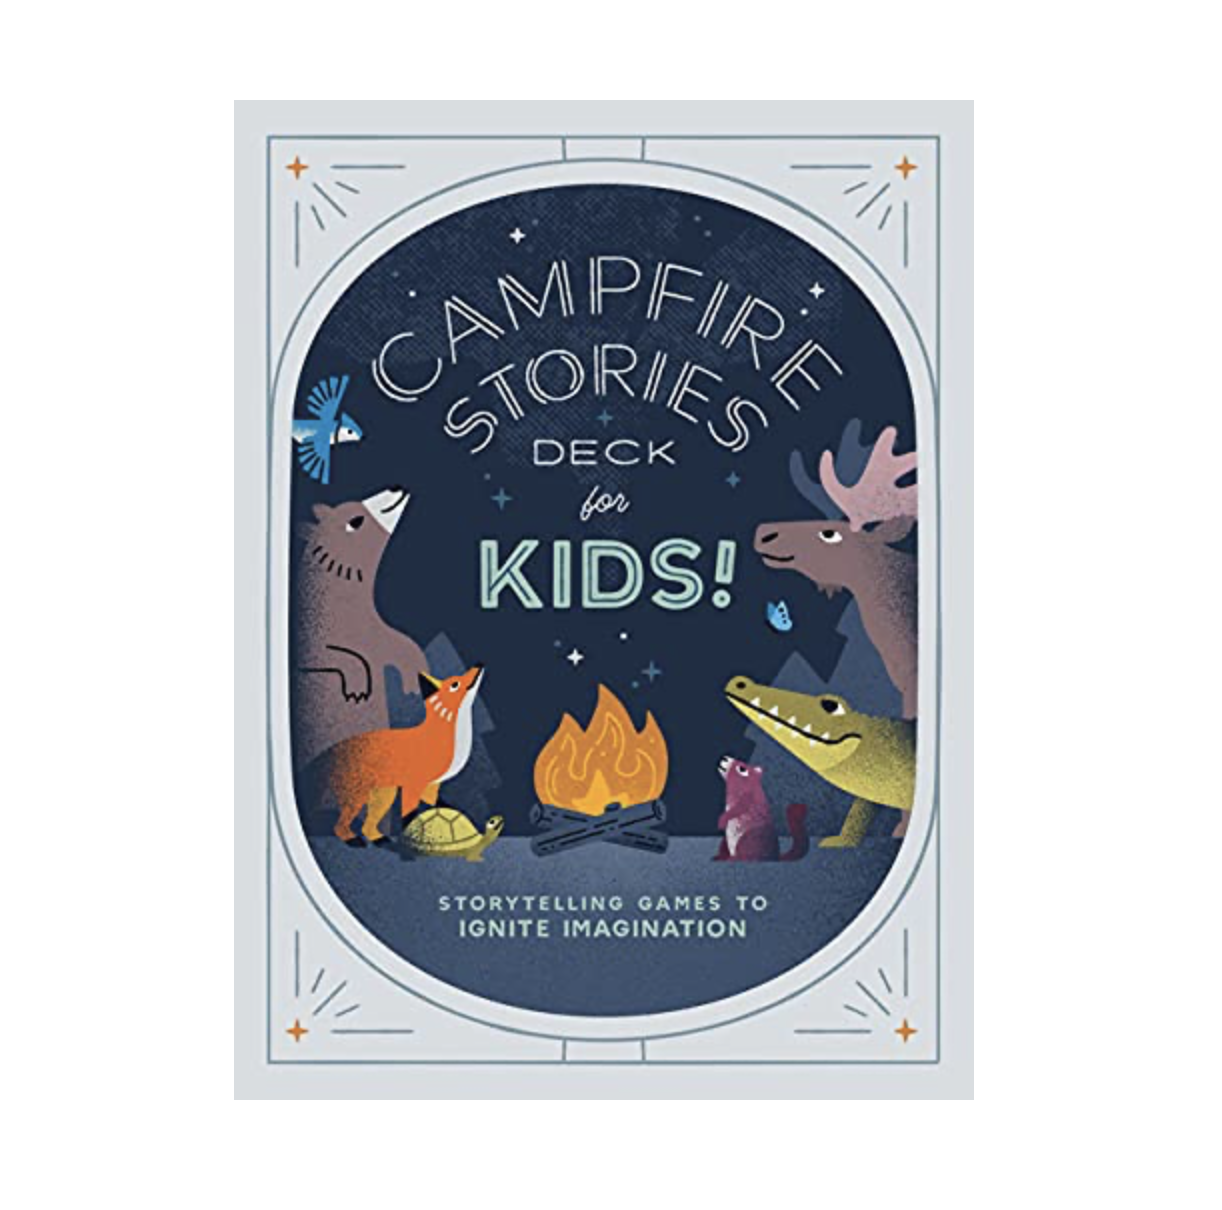 Campfire Stories Deck- For Kids!